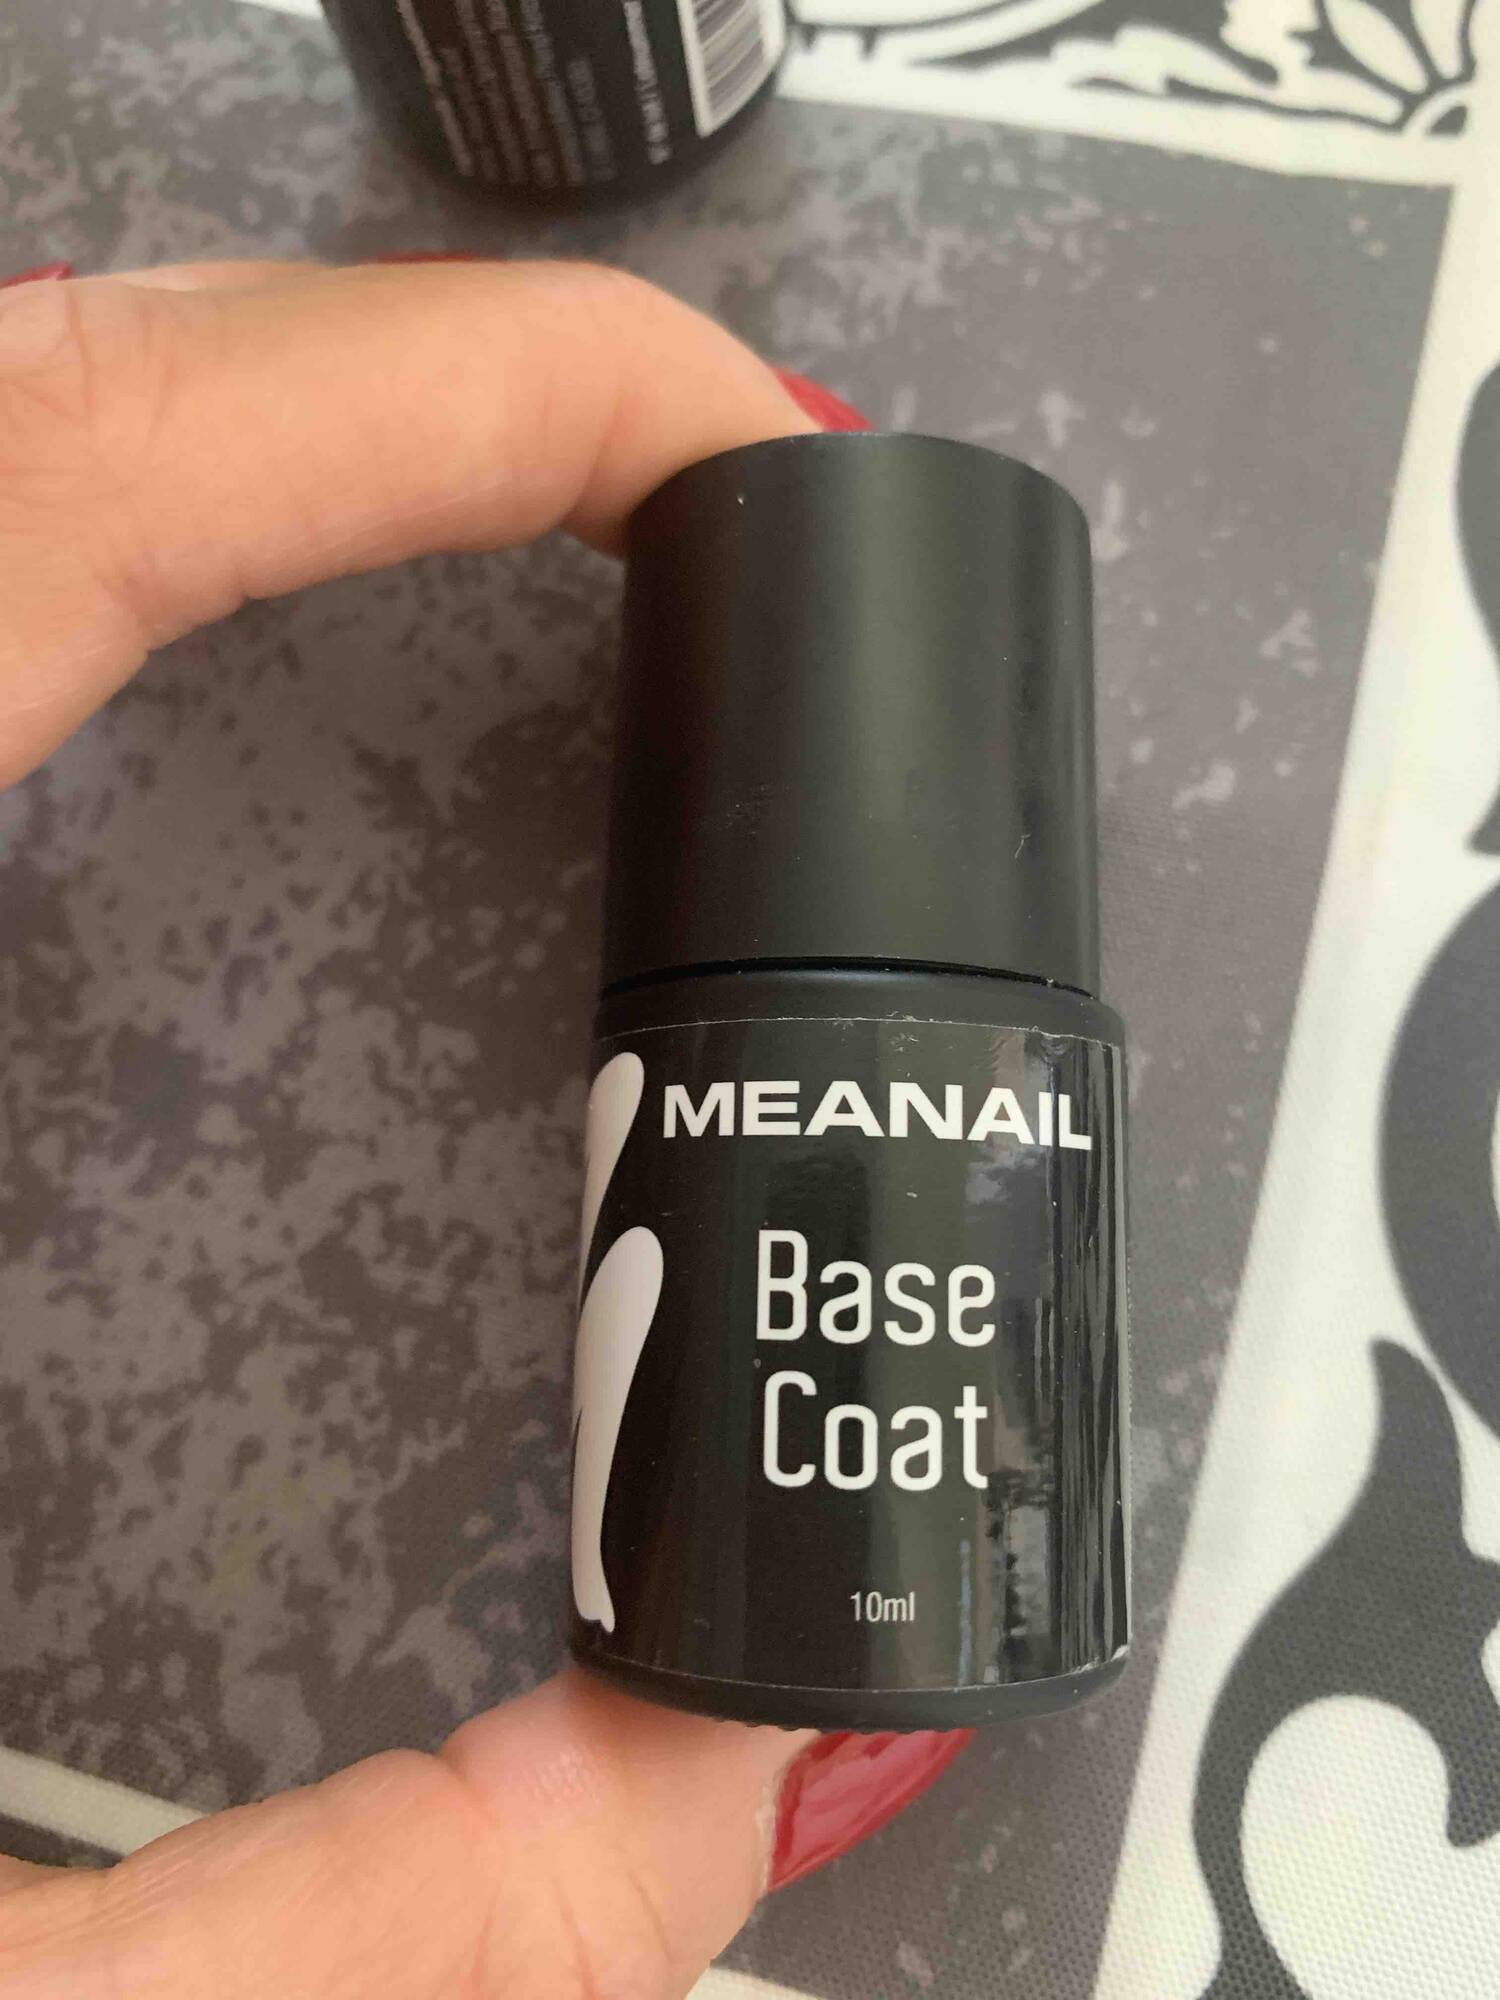 MEANAIL - Base coat